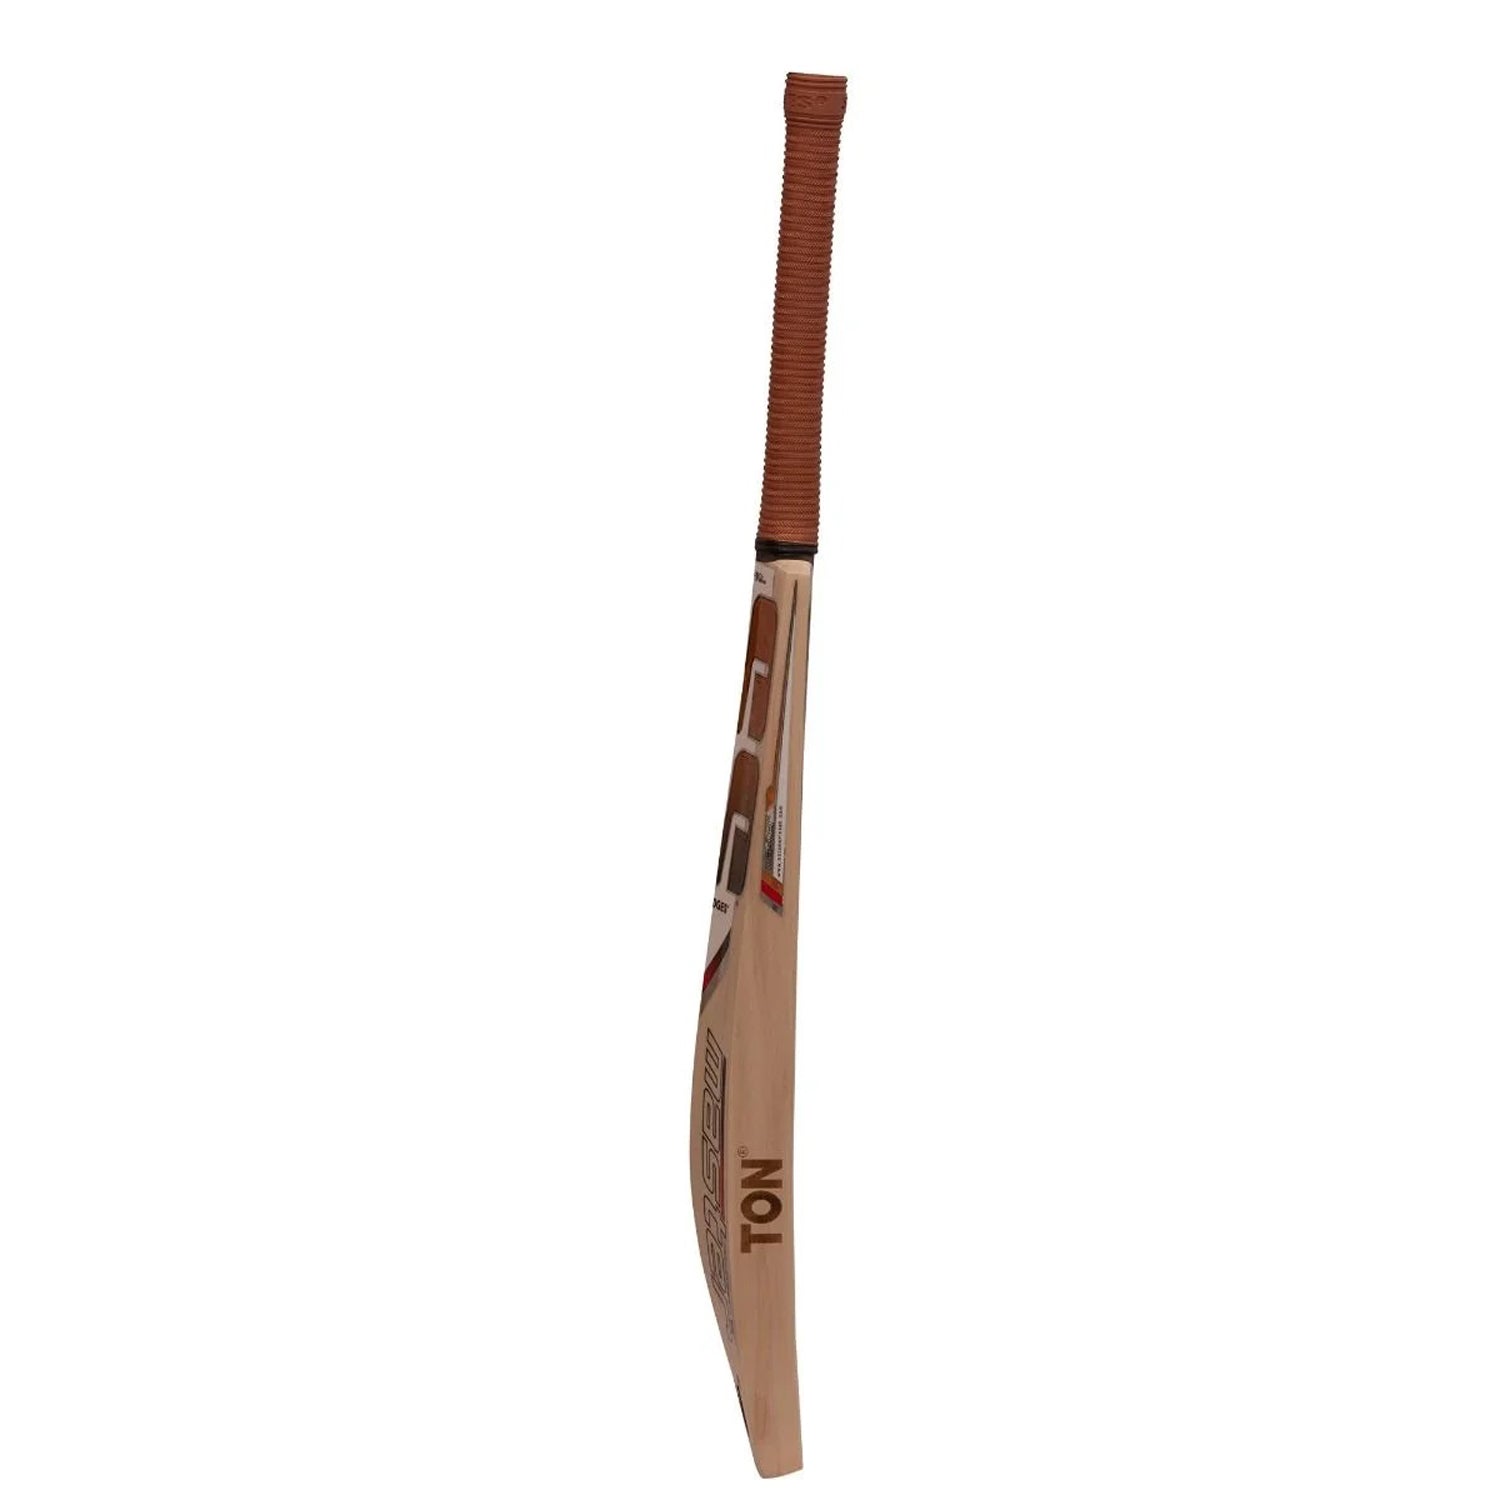 SS Master 2000 English Willow Cricket Bat - Best Price online Prokicksports.com